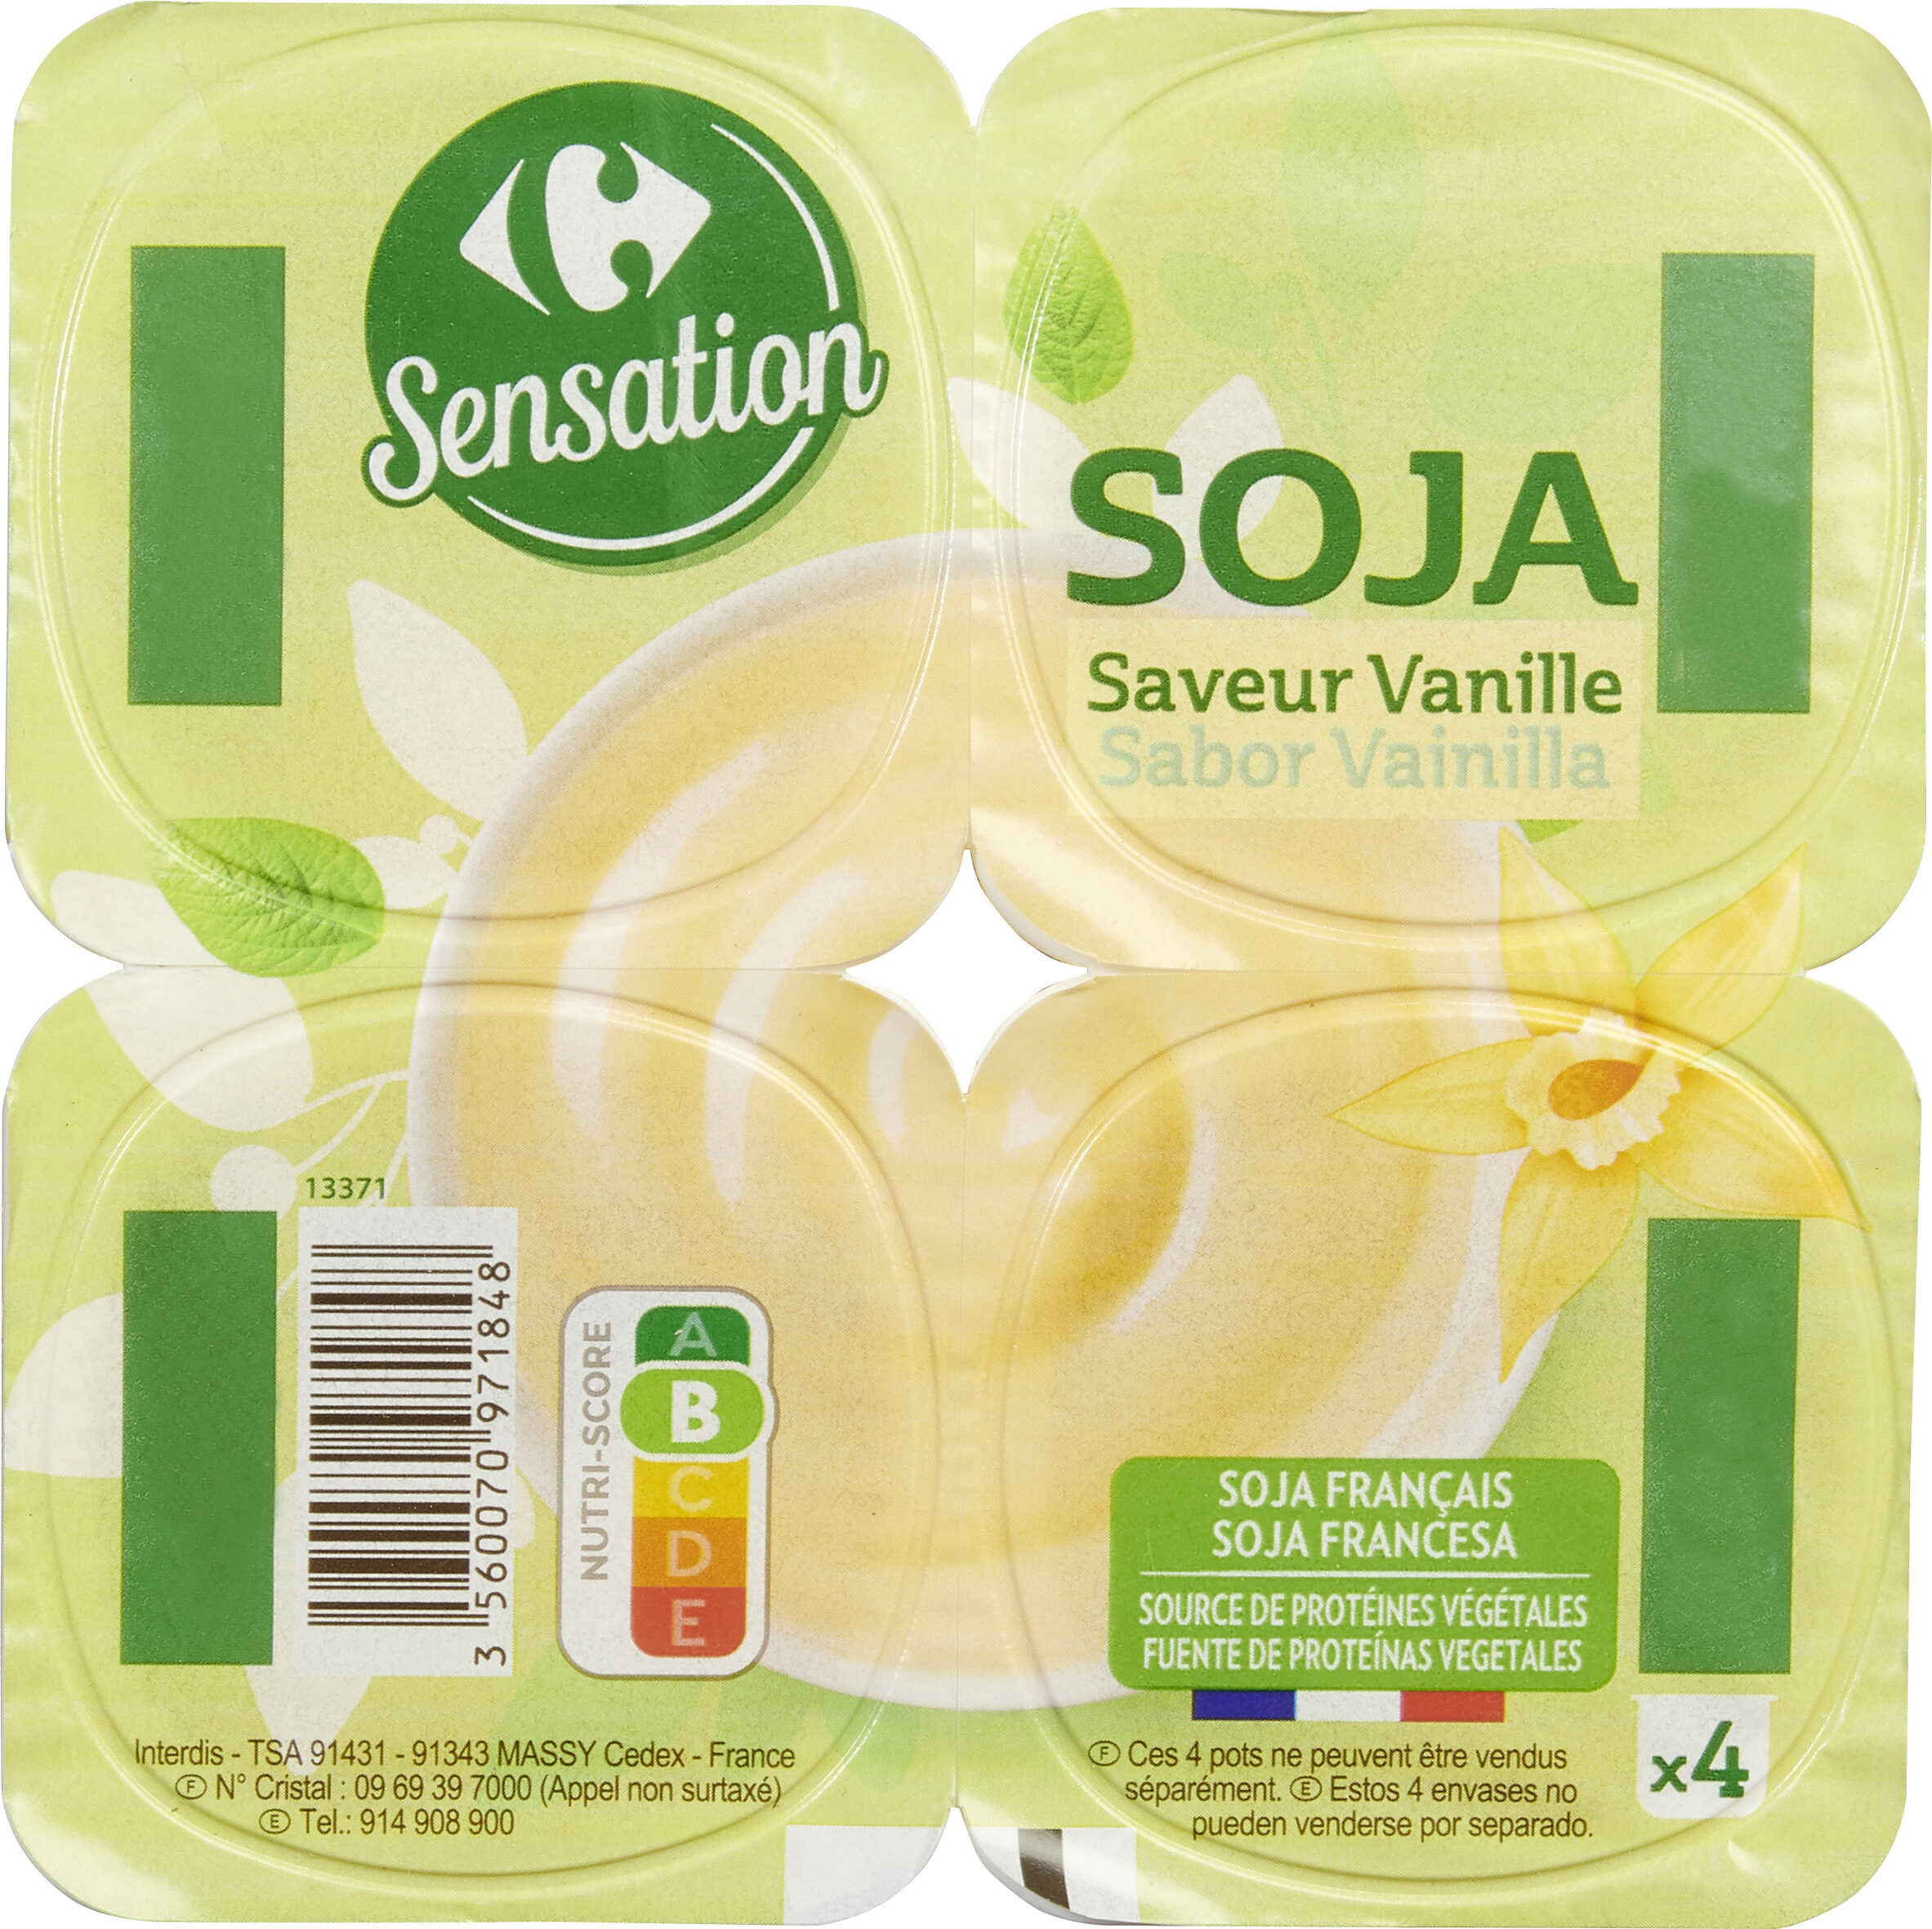 SOJA saveur Vanille - Product - fr